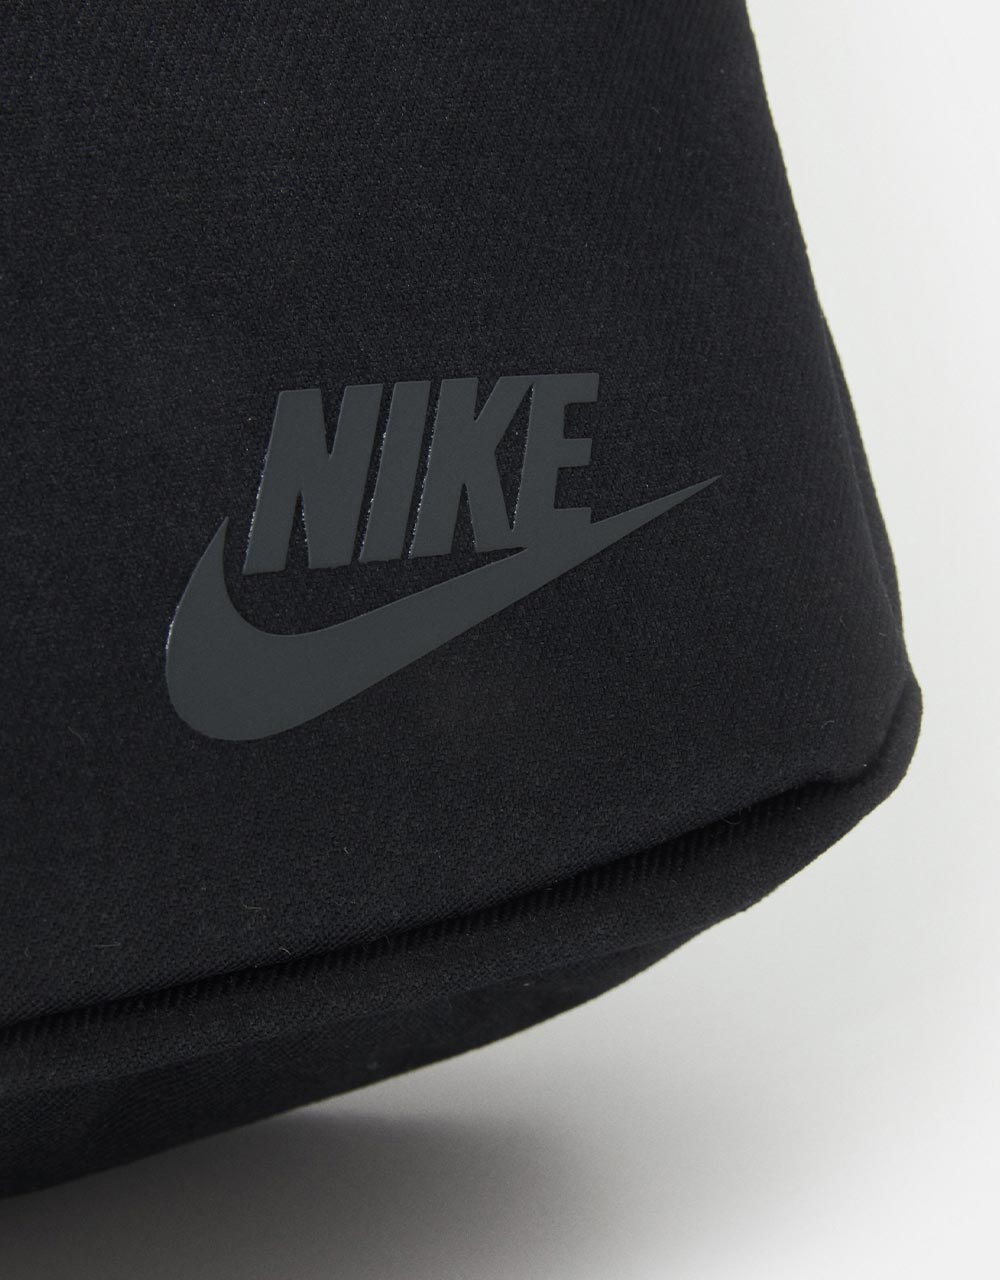 Nike SB Elemental Cross Body Bag - Black/Black/Anthracite